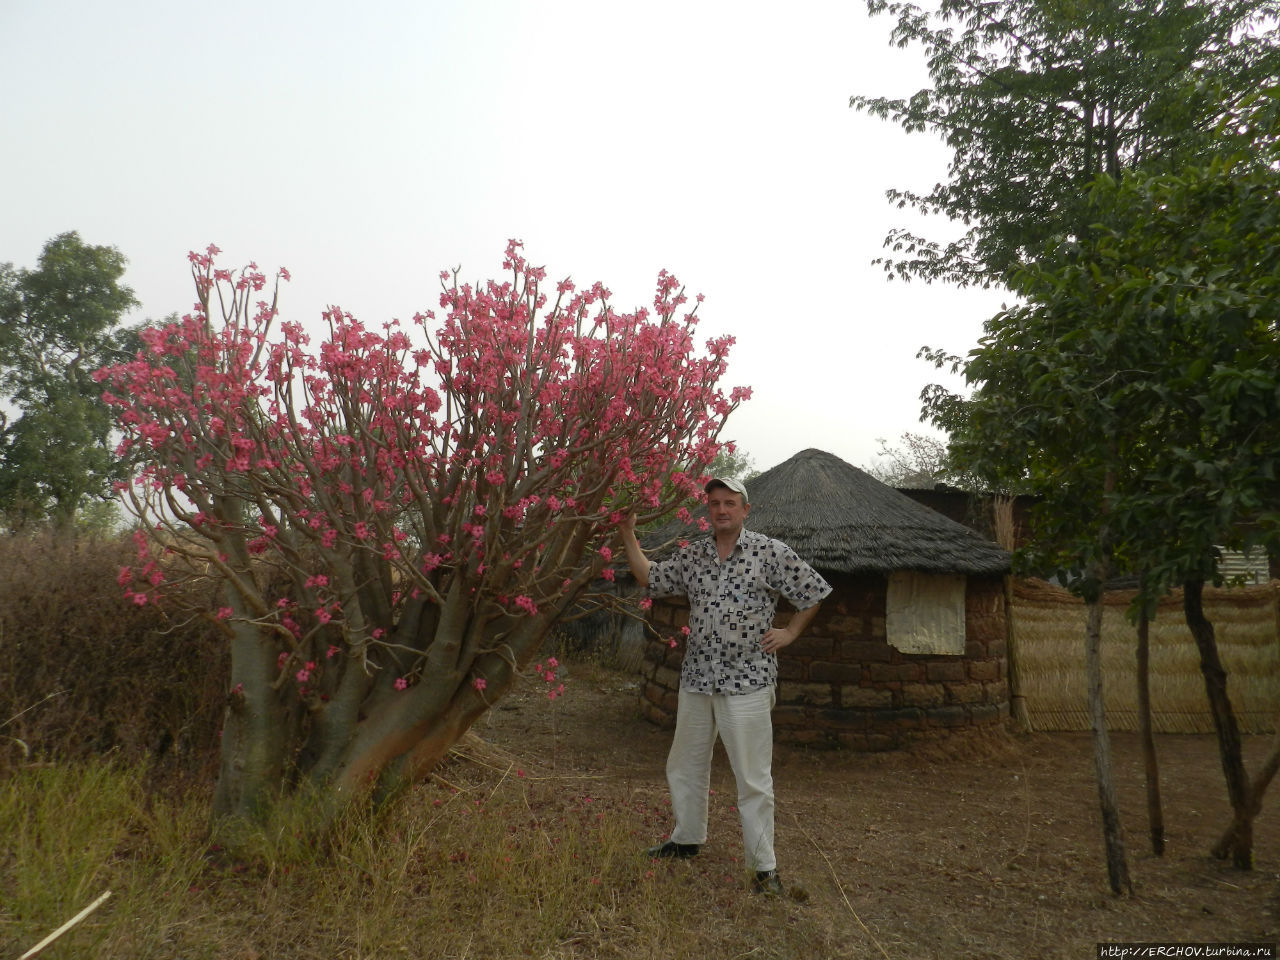 Цветы январской саванны Поли, Камерун